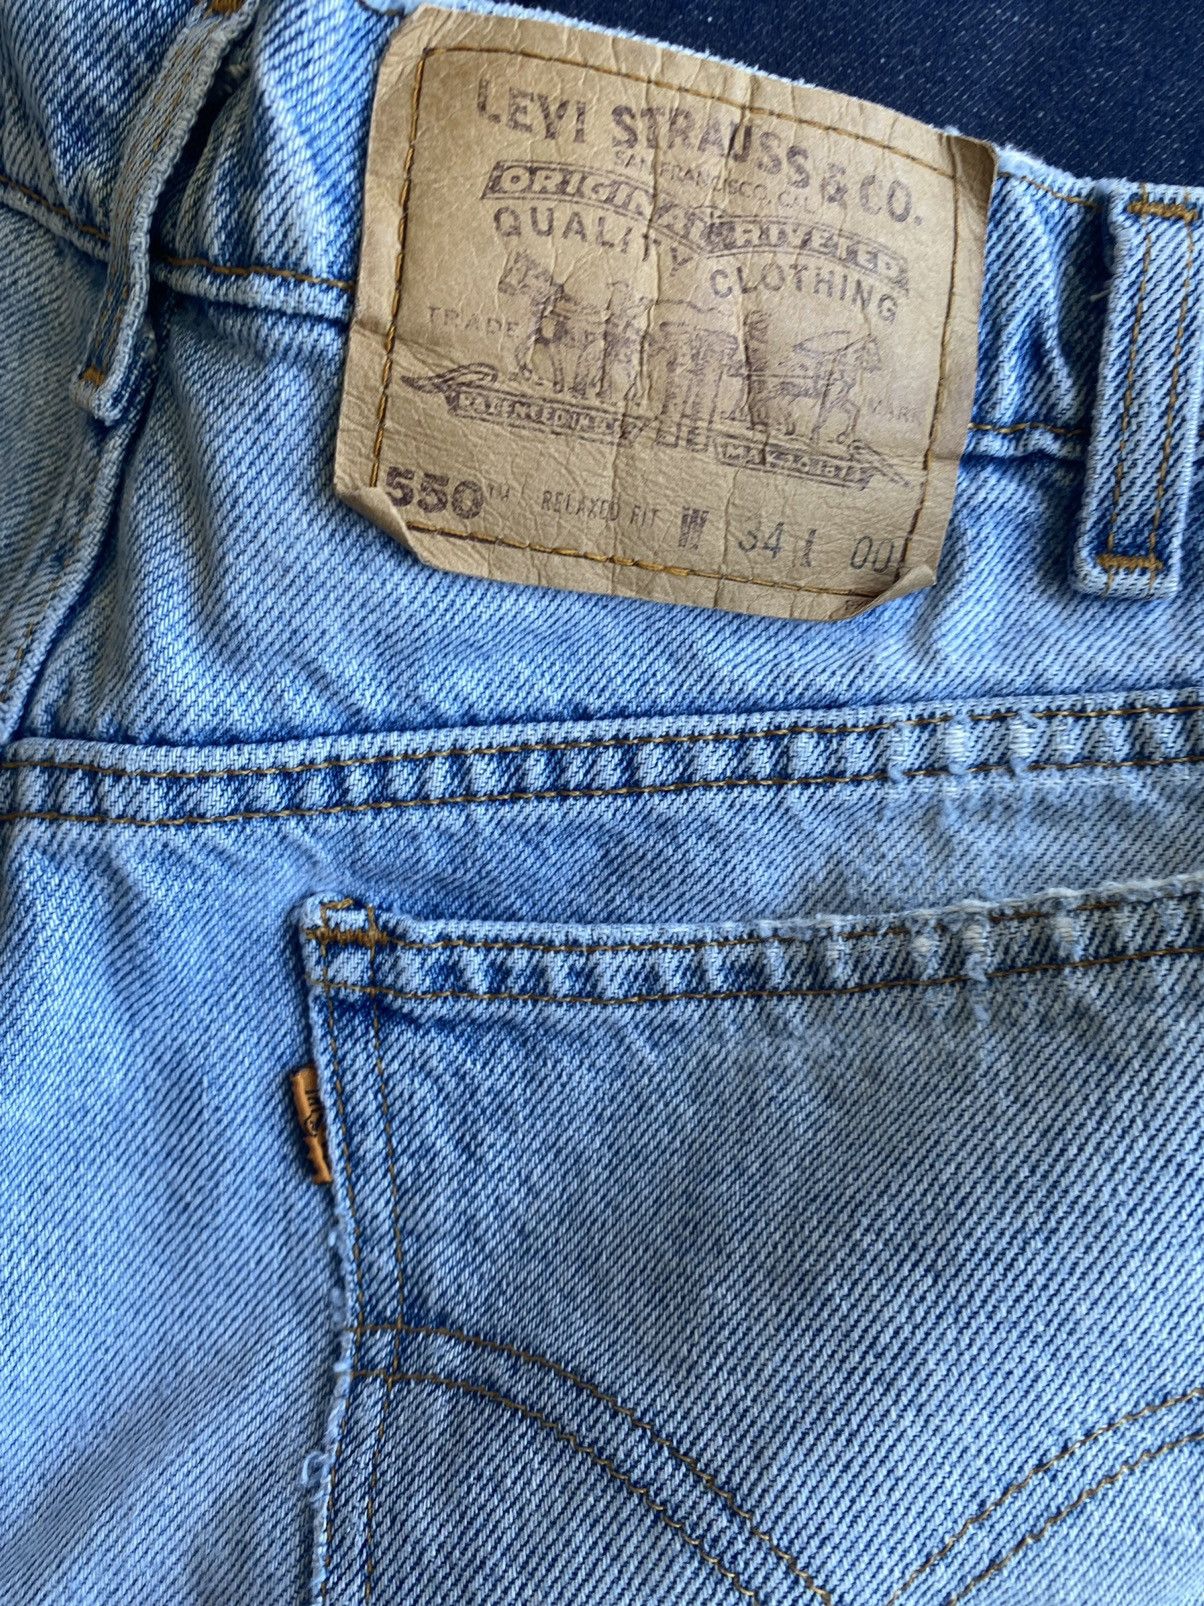 Vintage Vintage y2k Levi’s 550 orange tab jean shorts Levi’s jorts Size US 32 / EU 48 - 5 Thumbnail